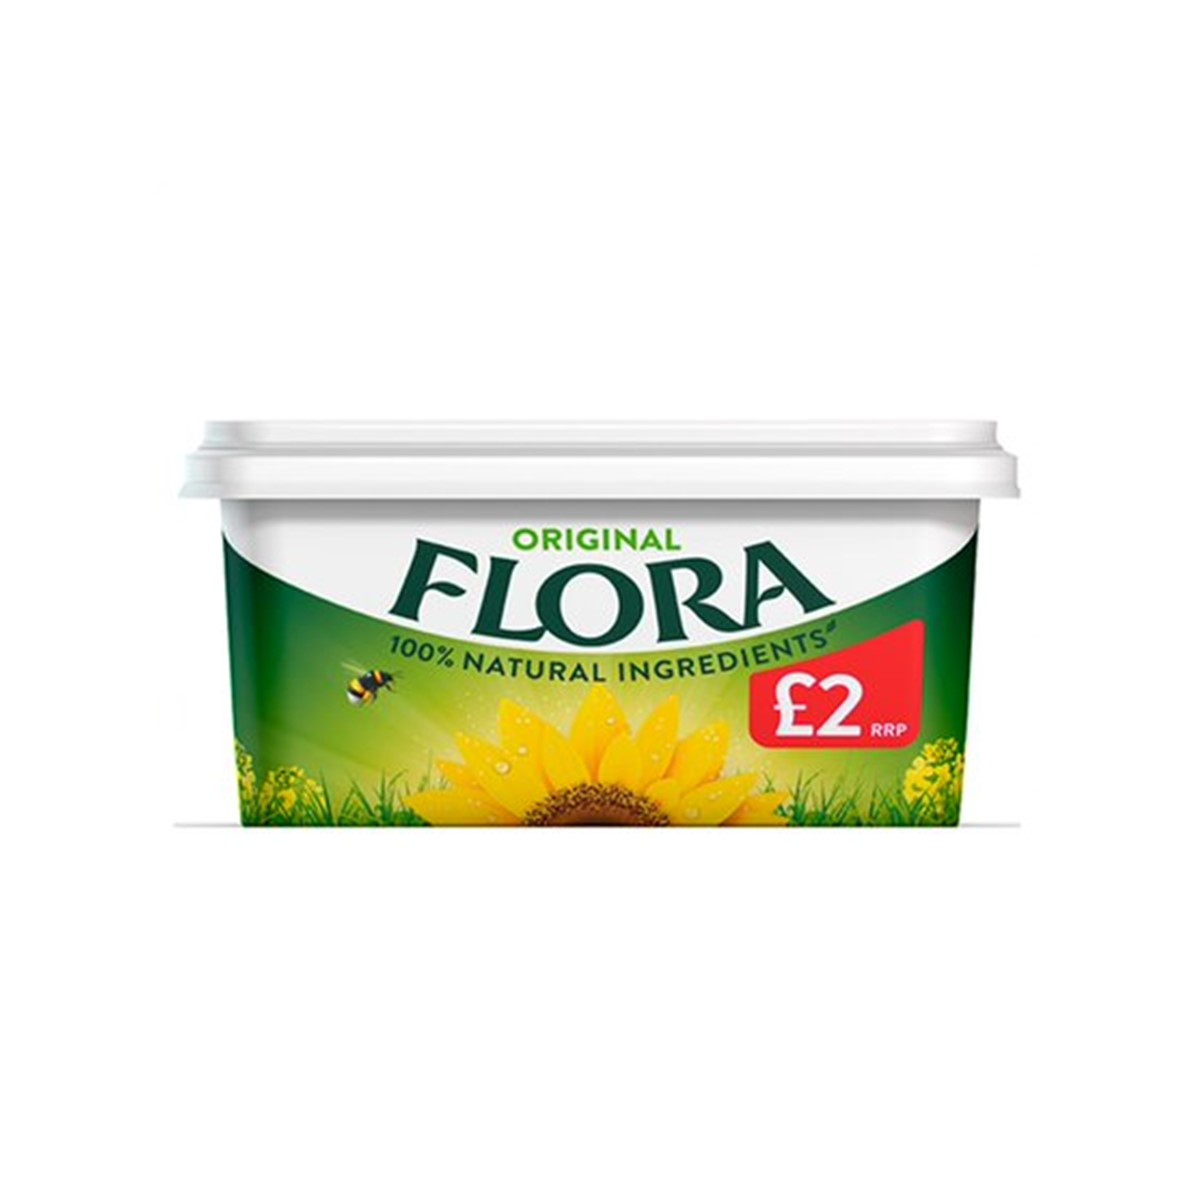 Flora Original - 500g tub